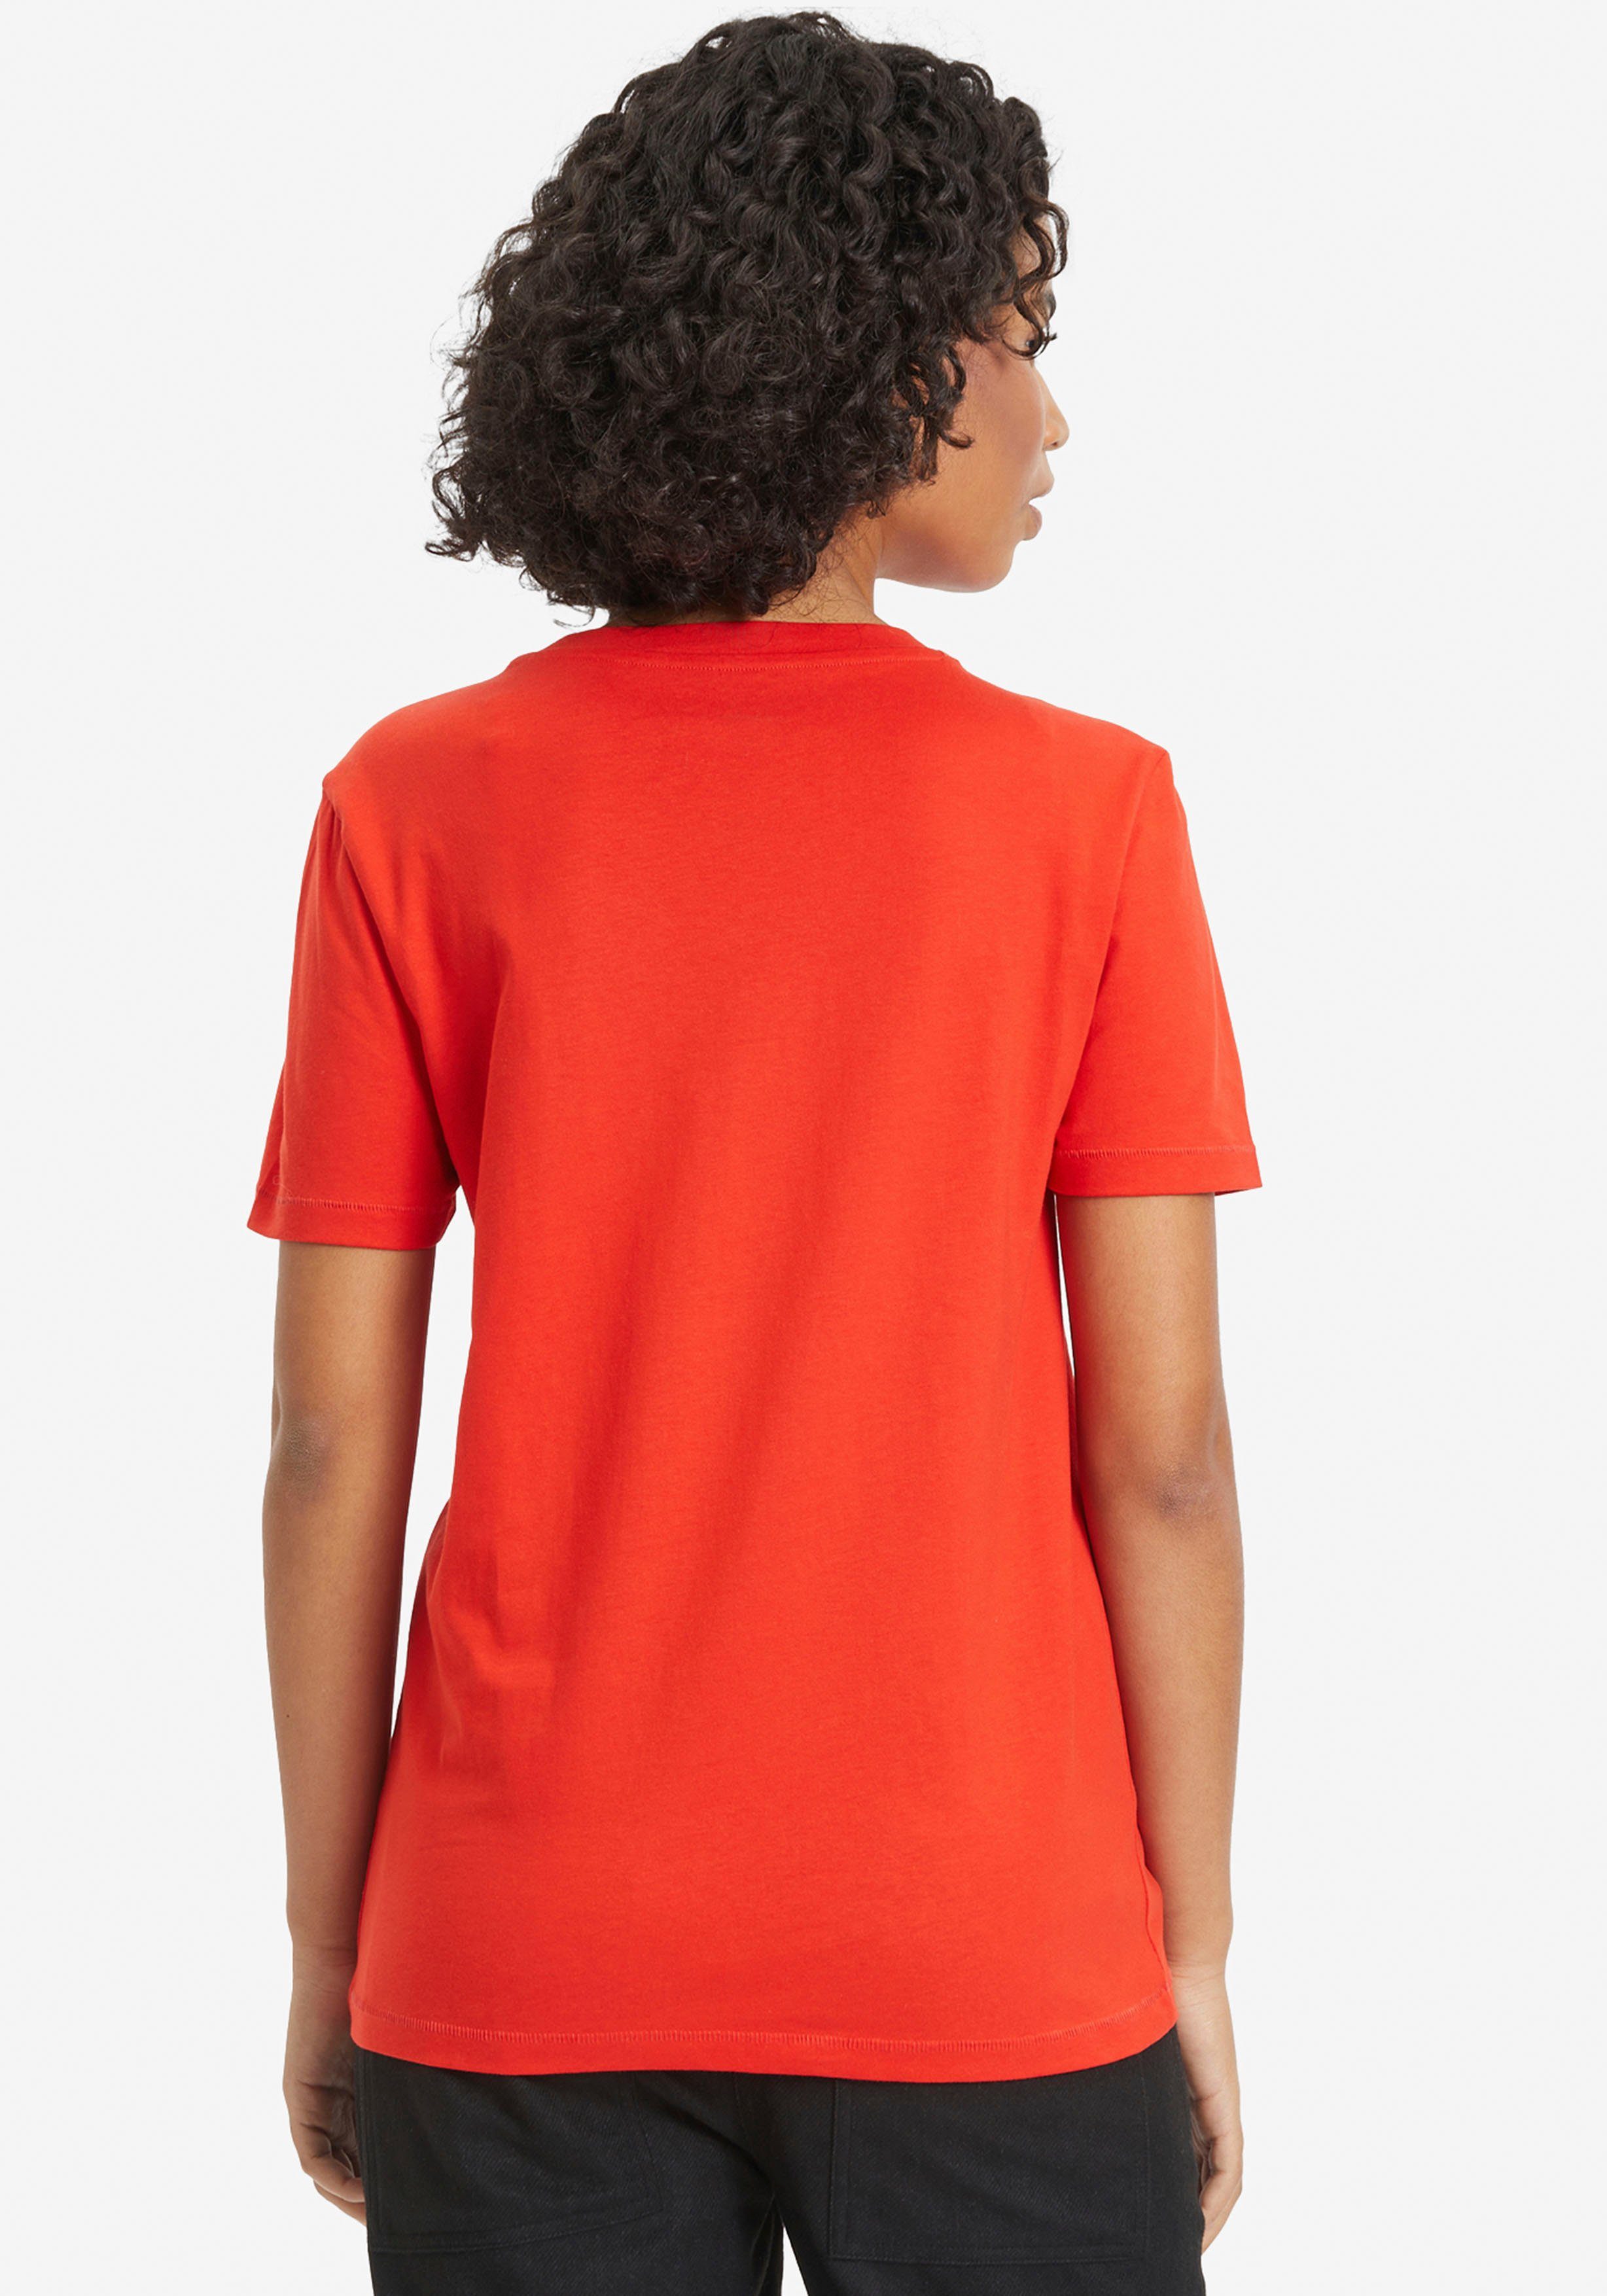 KOLLEKTION Rundhalsausschnitt Tamaris T-Shirt - NEUE red fiery mit